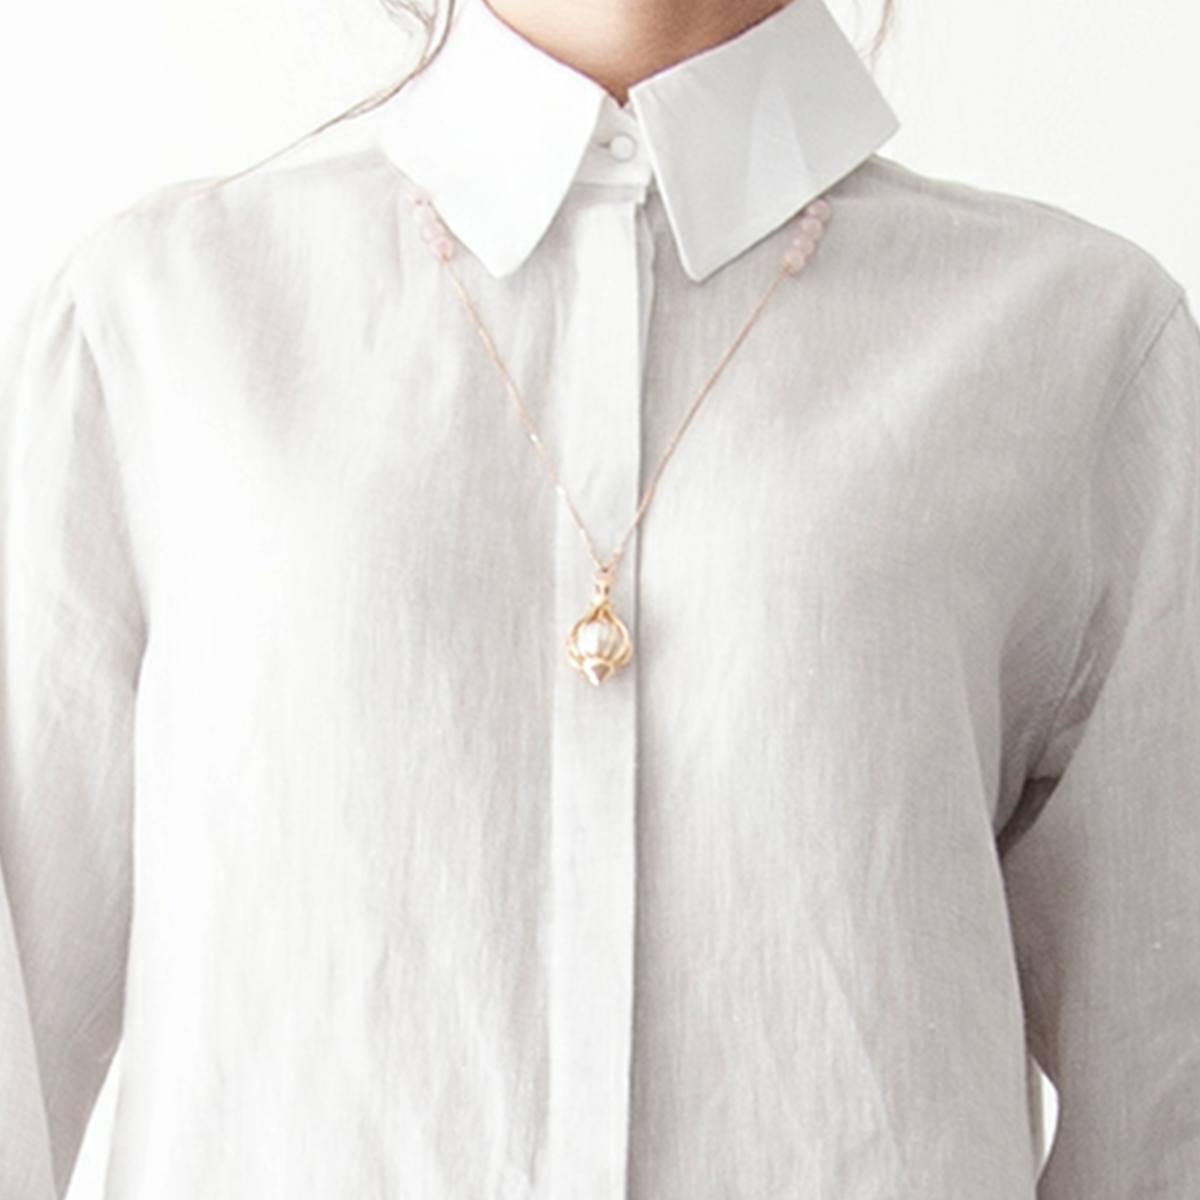 Women's 100% Linen Shirt - Mia - White - Made in Ireland